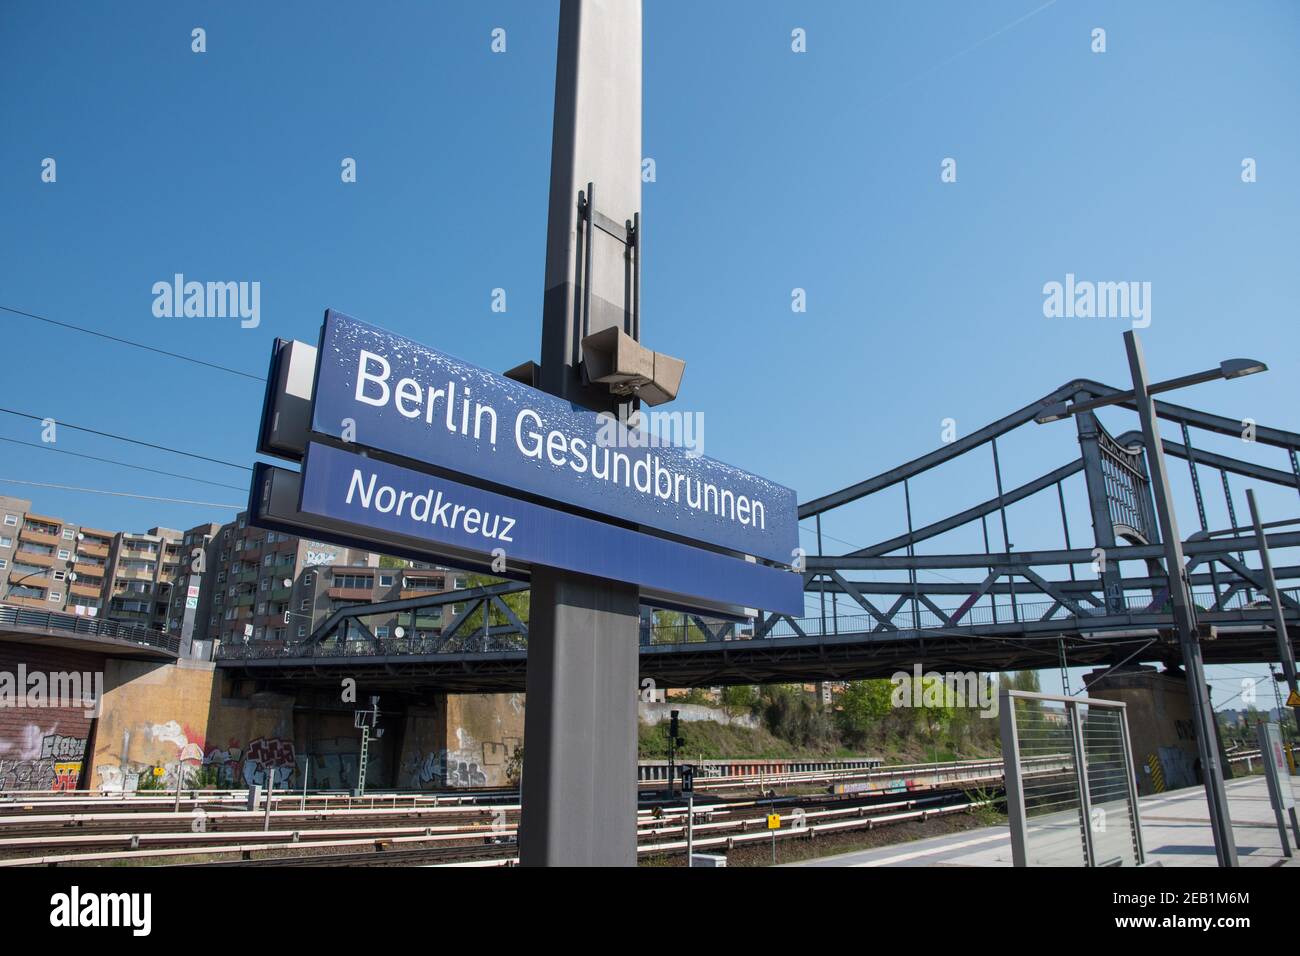 Berlin Germany - April 20. 2018: Berlin Gesundbrunnen train station sign Stock Photo